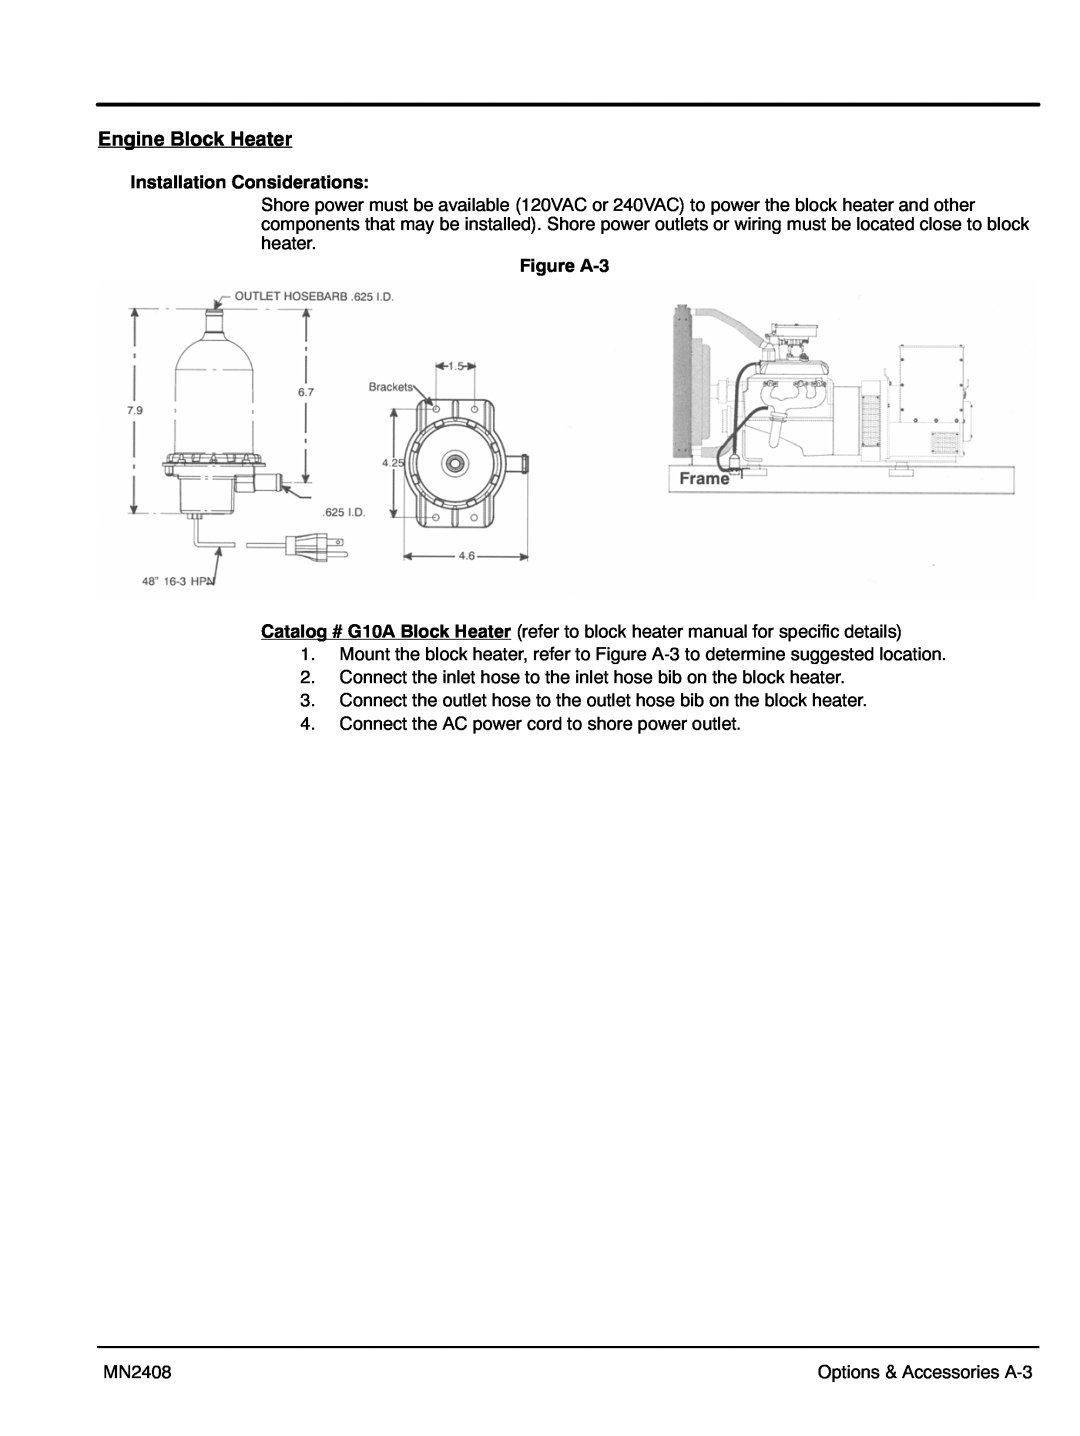 Baldor GLC20, GLC60, GLC105 manual Engine Block Heater, Installation Considerations, Figure A‐3, Options & Accessories A‐3 